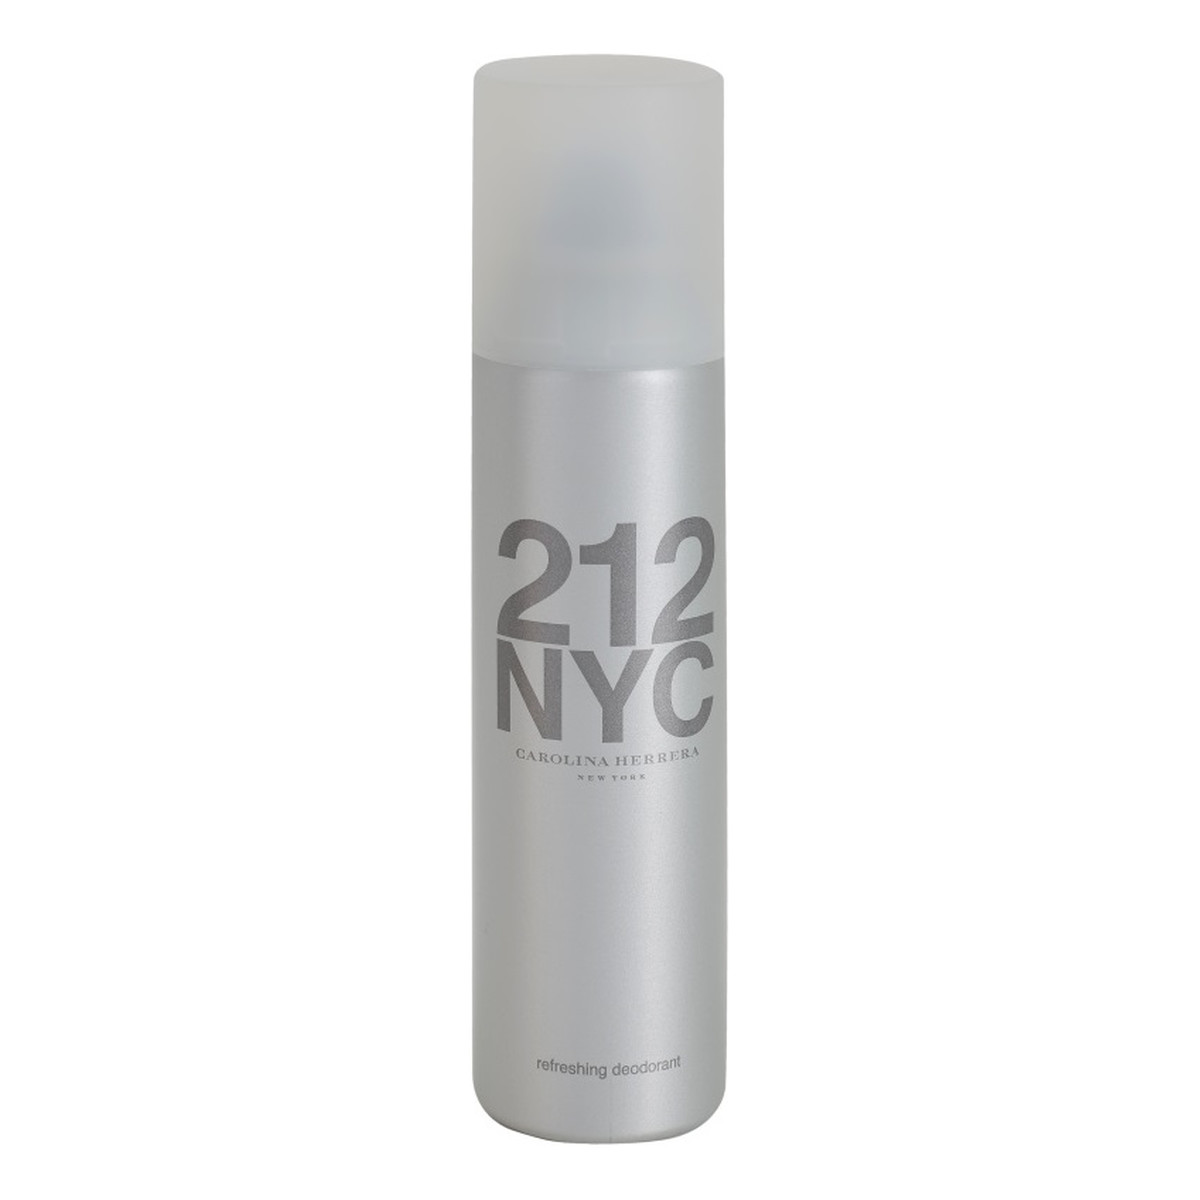 Carolina Herrera 212 NYC Dezodorant dla kobiet 150ml